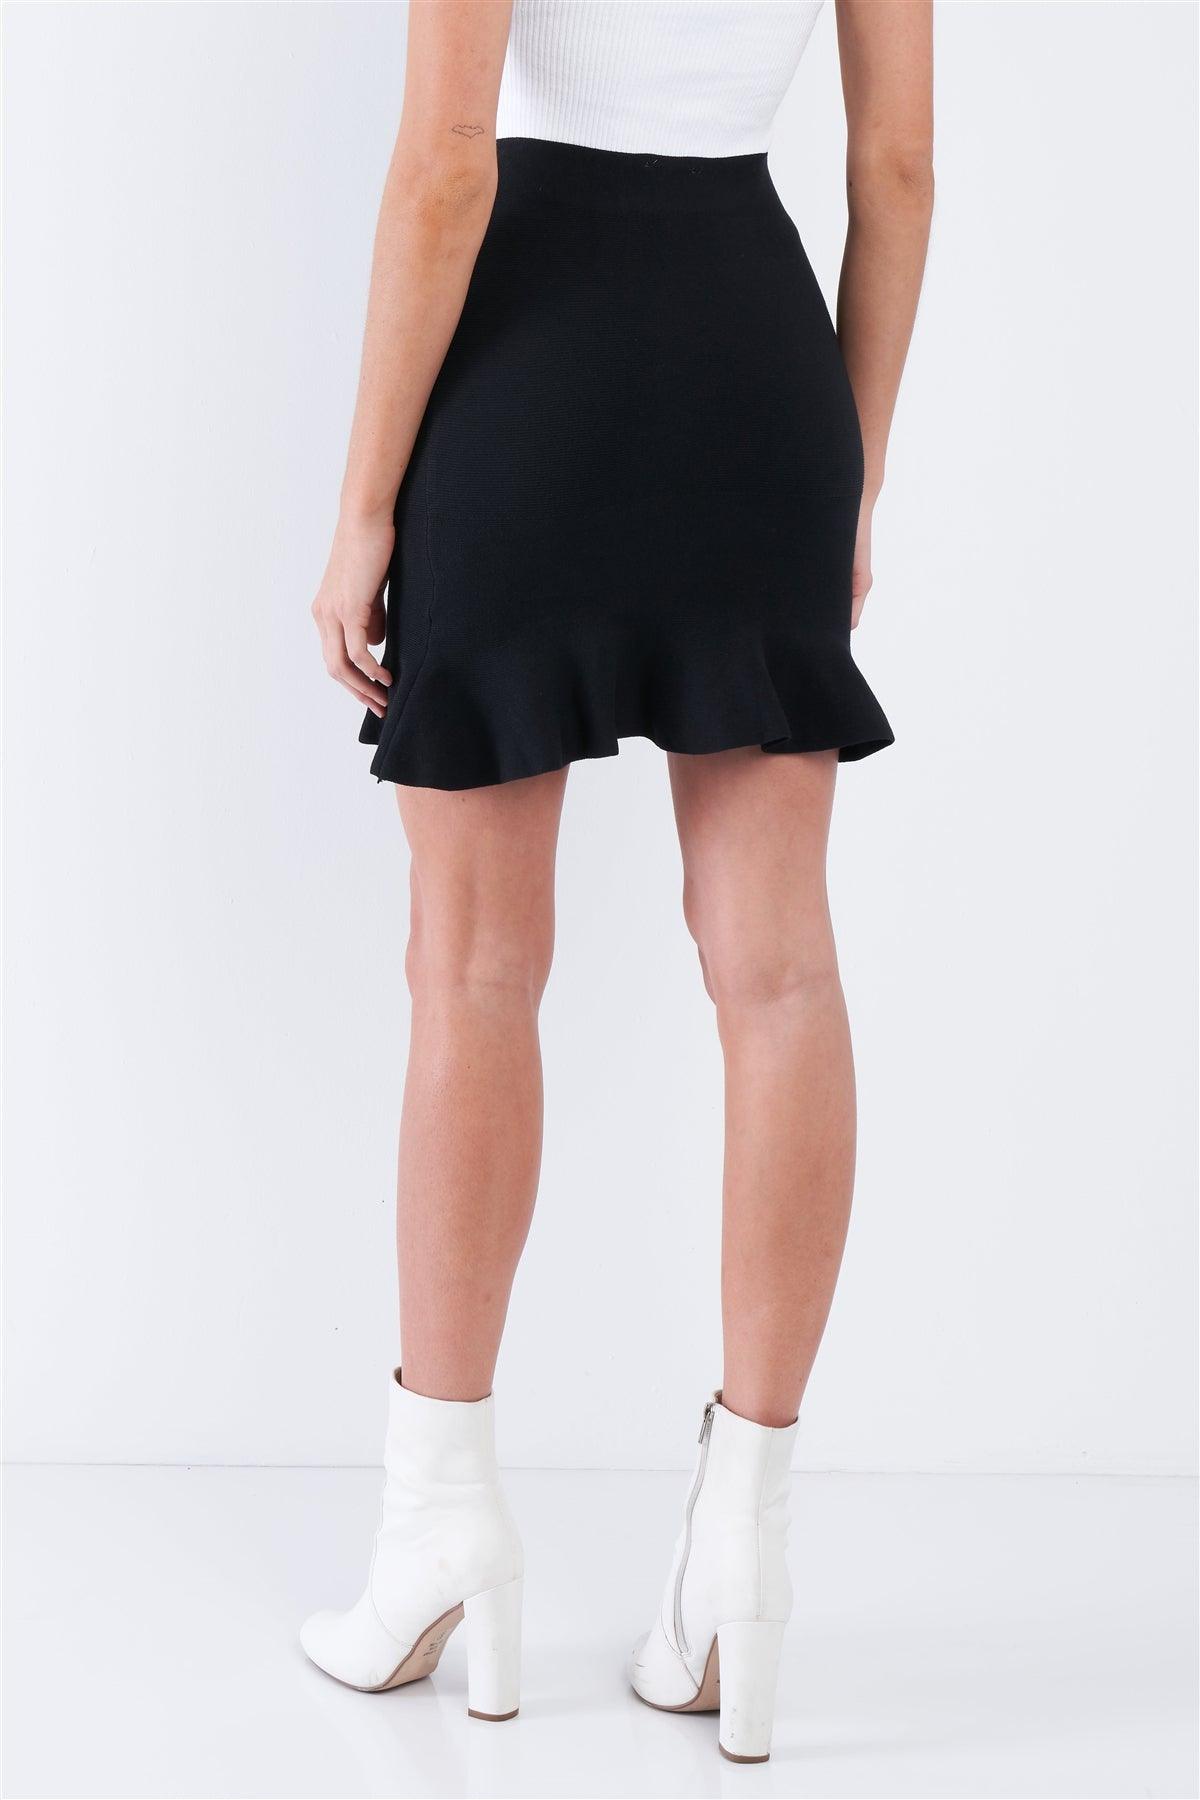 Black Sleek Mermaid Frill Hem Mini Skirt /2-2-2